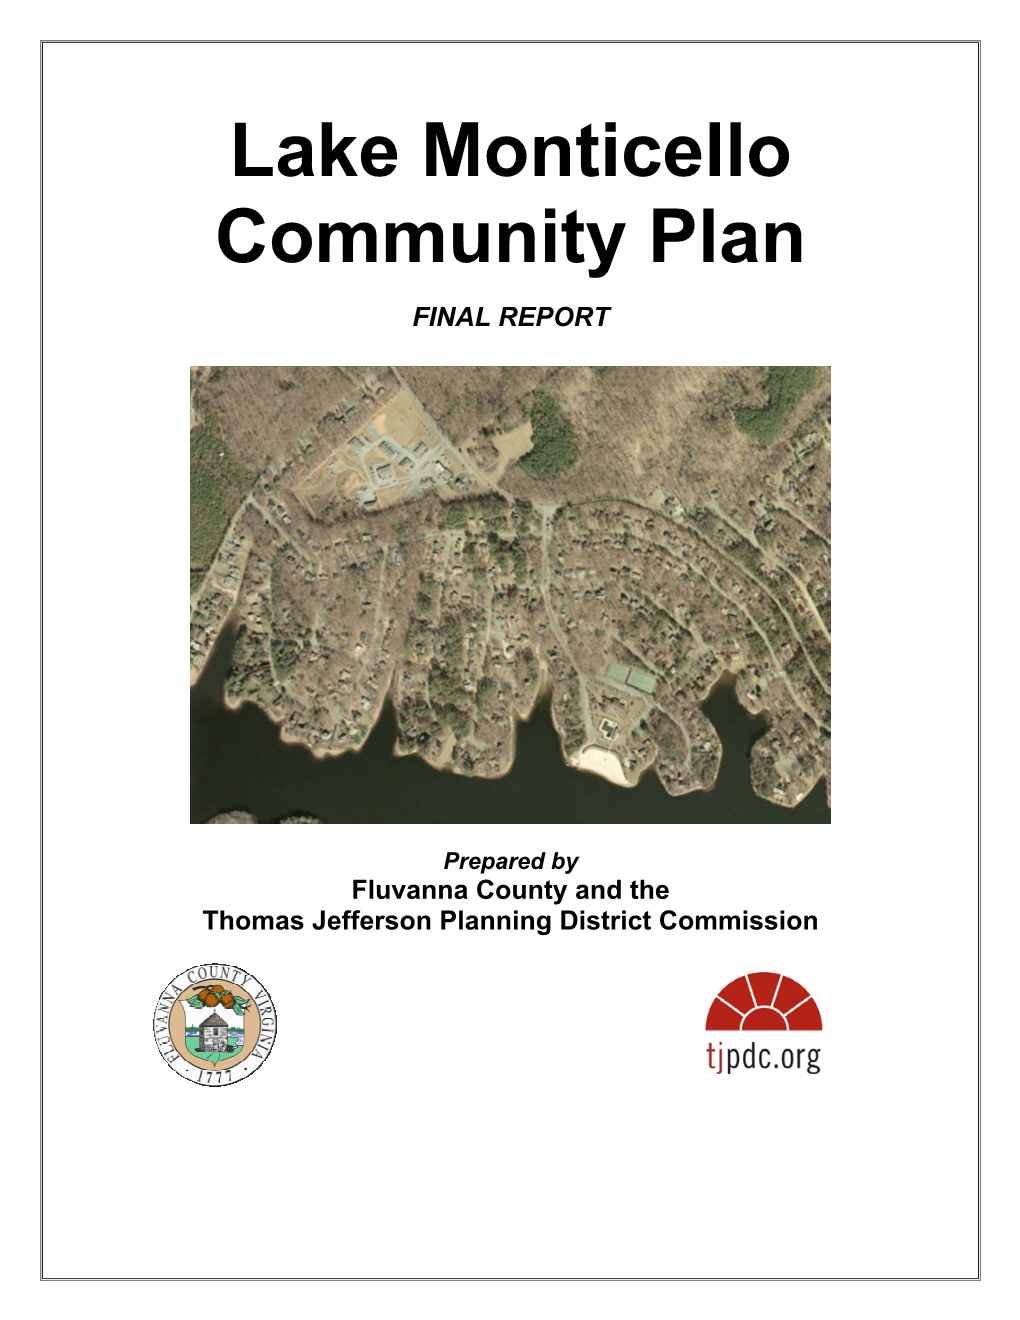 Lake Monticello Community Plan